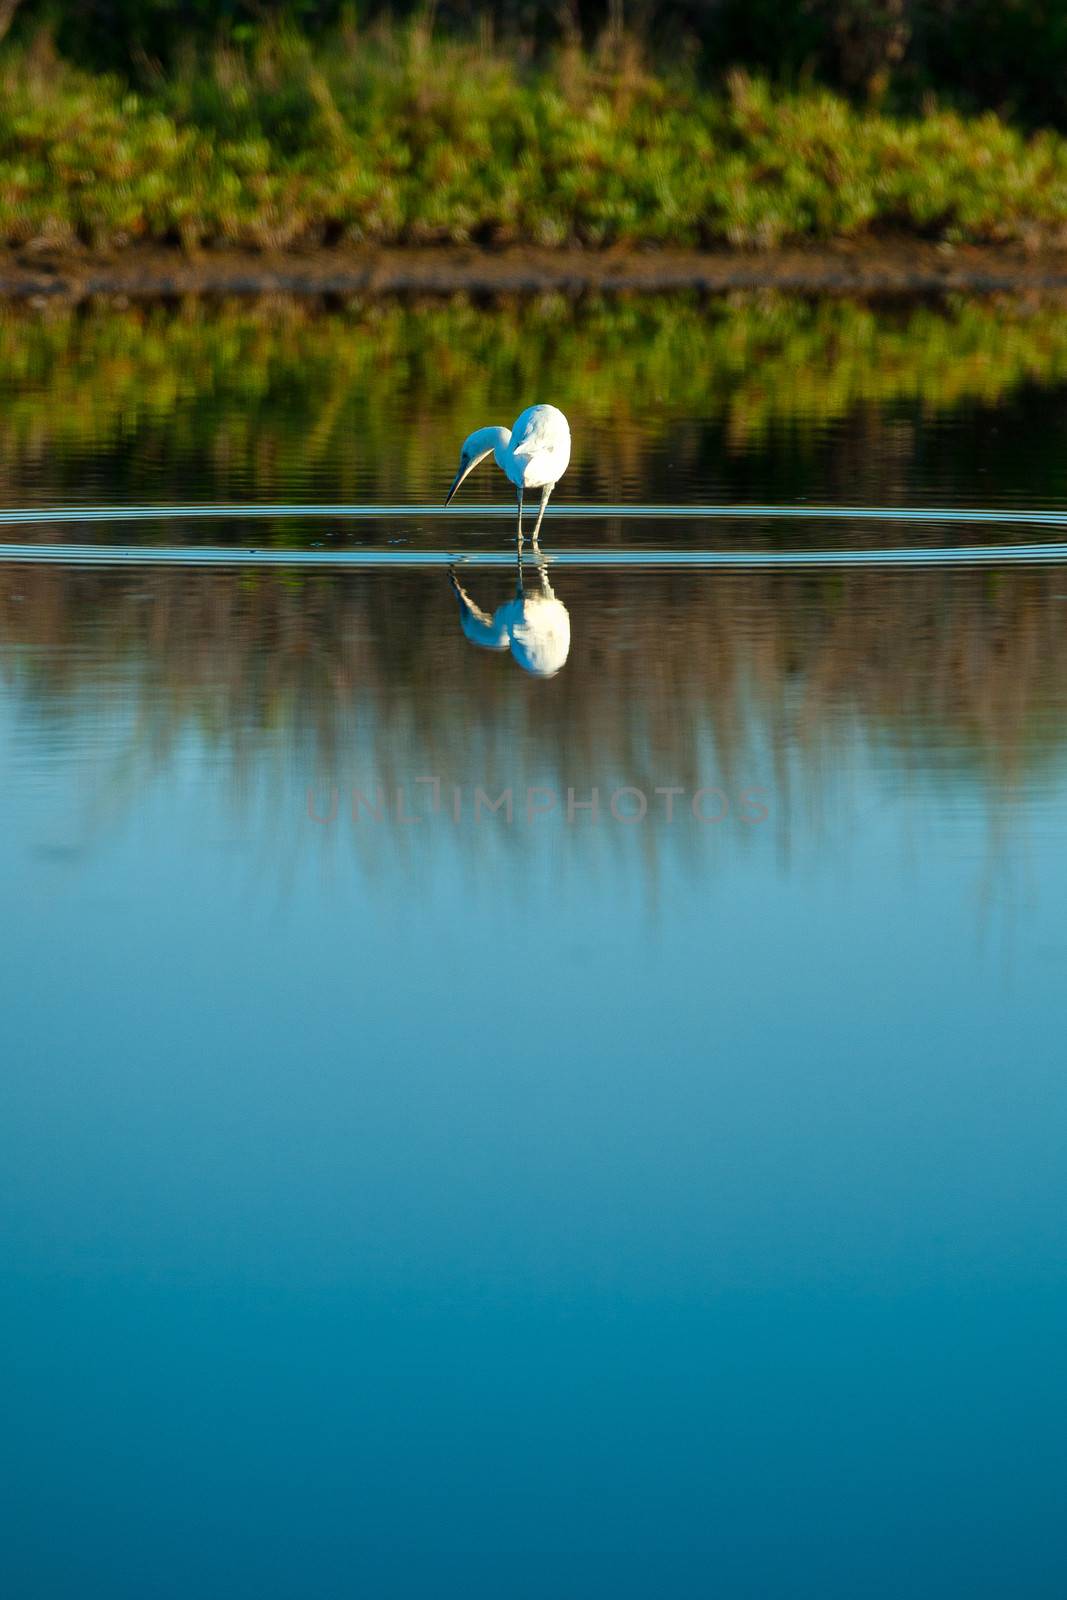 White bird hunting for fish on calm blue lake, Merrit Island, Florida, U.S.A.